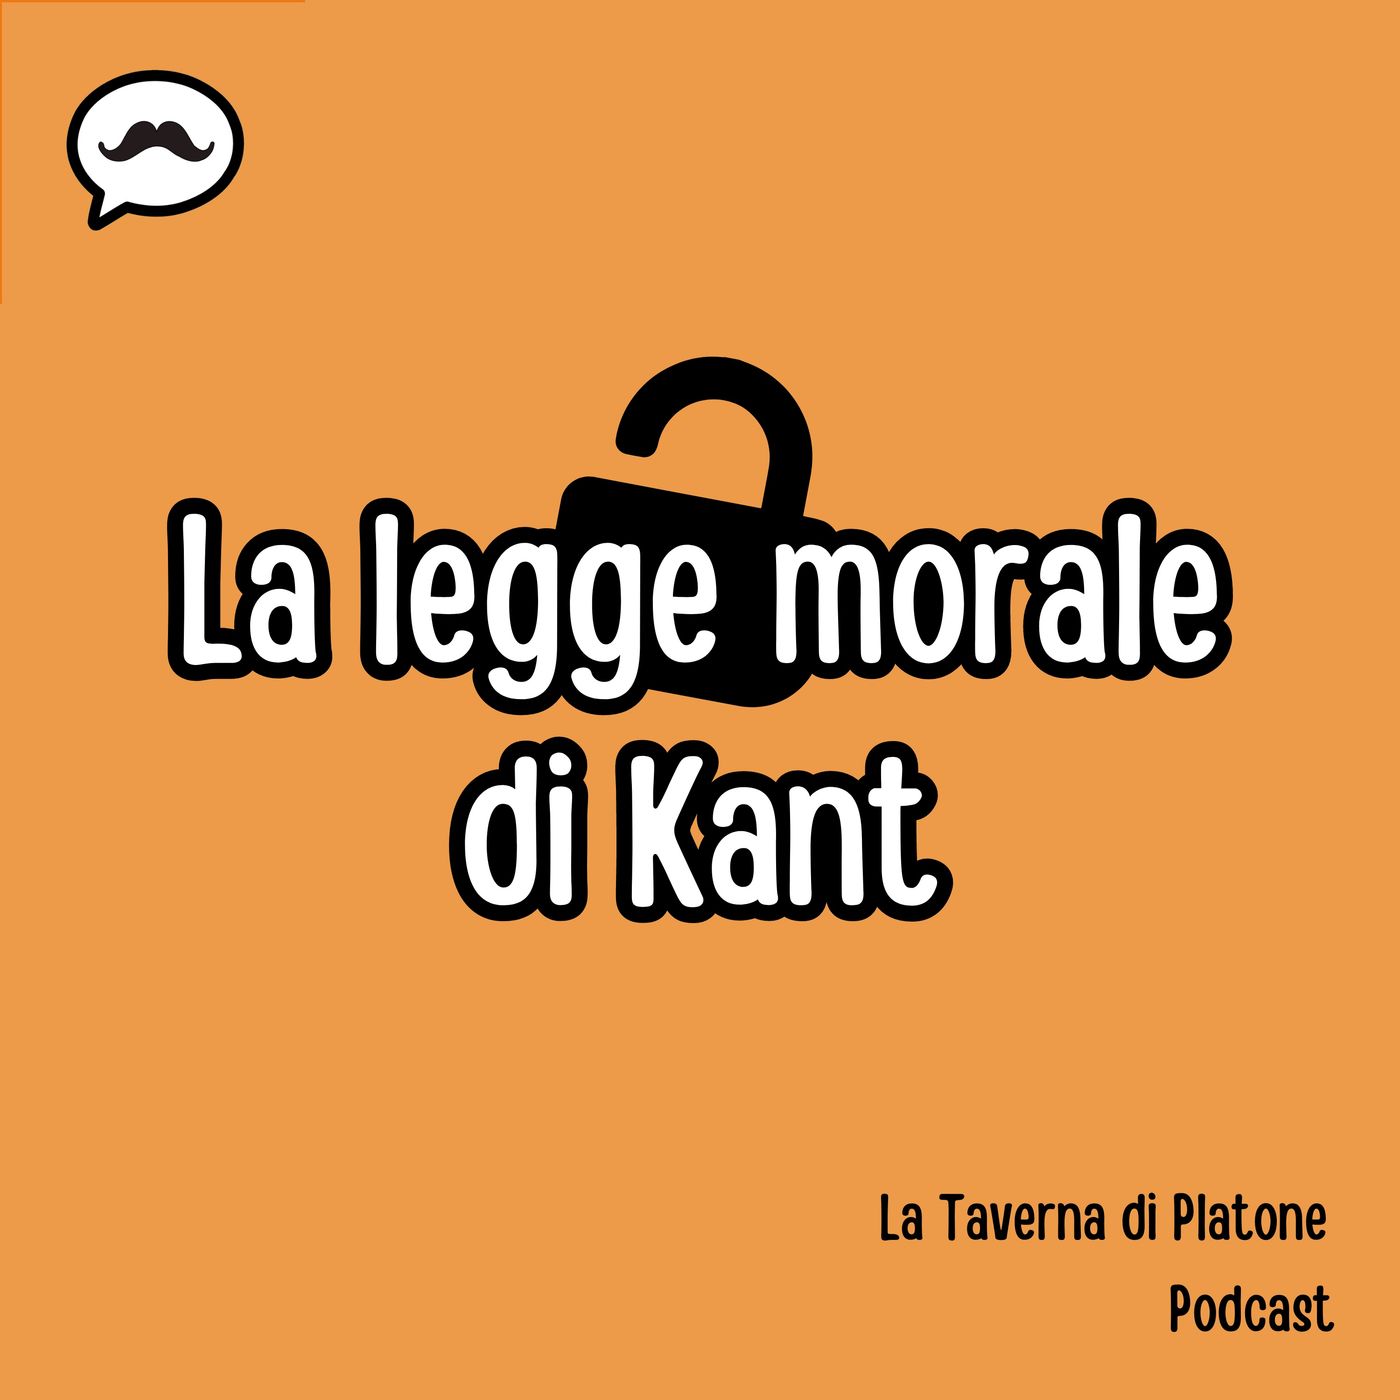 La legge morale di Kant